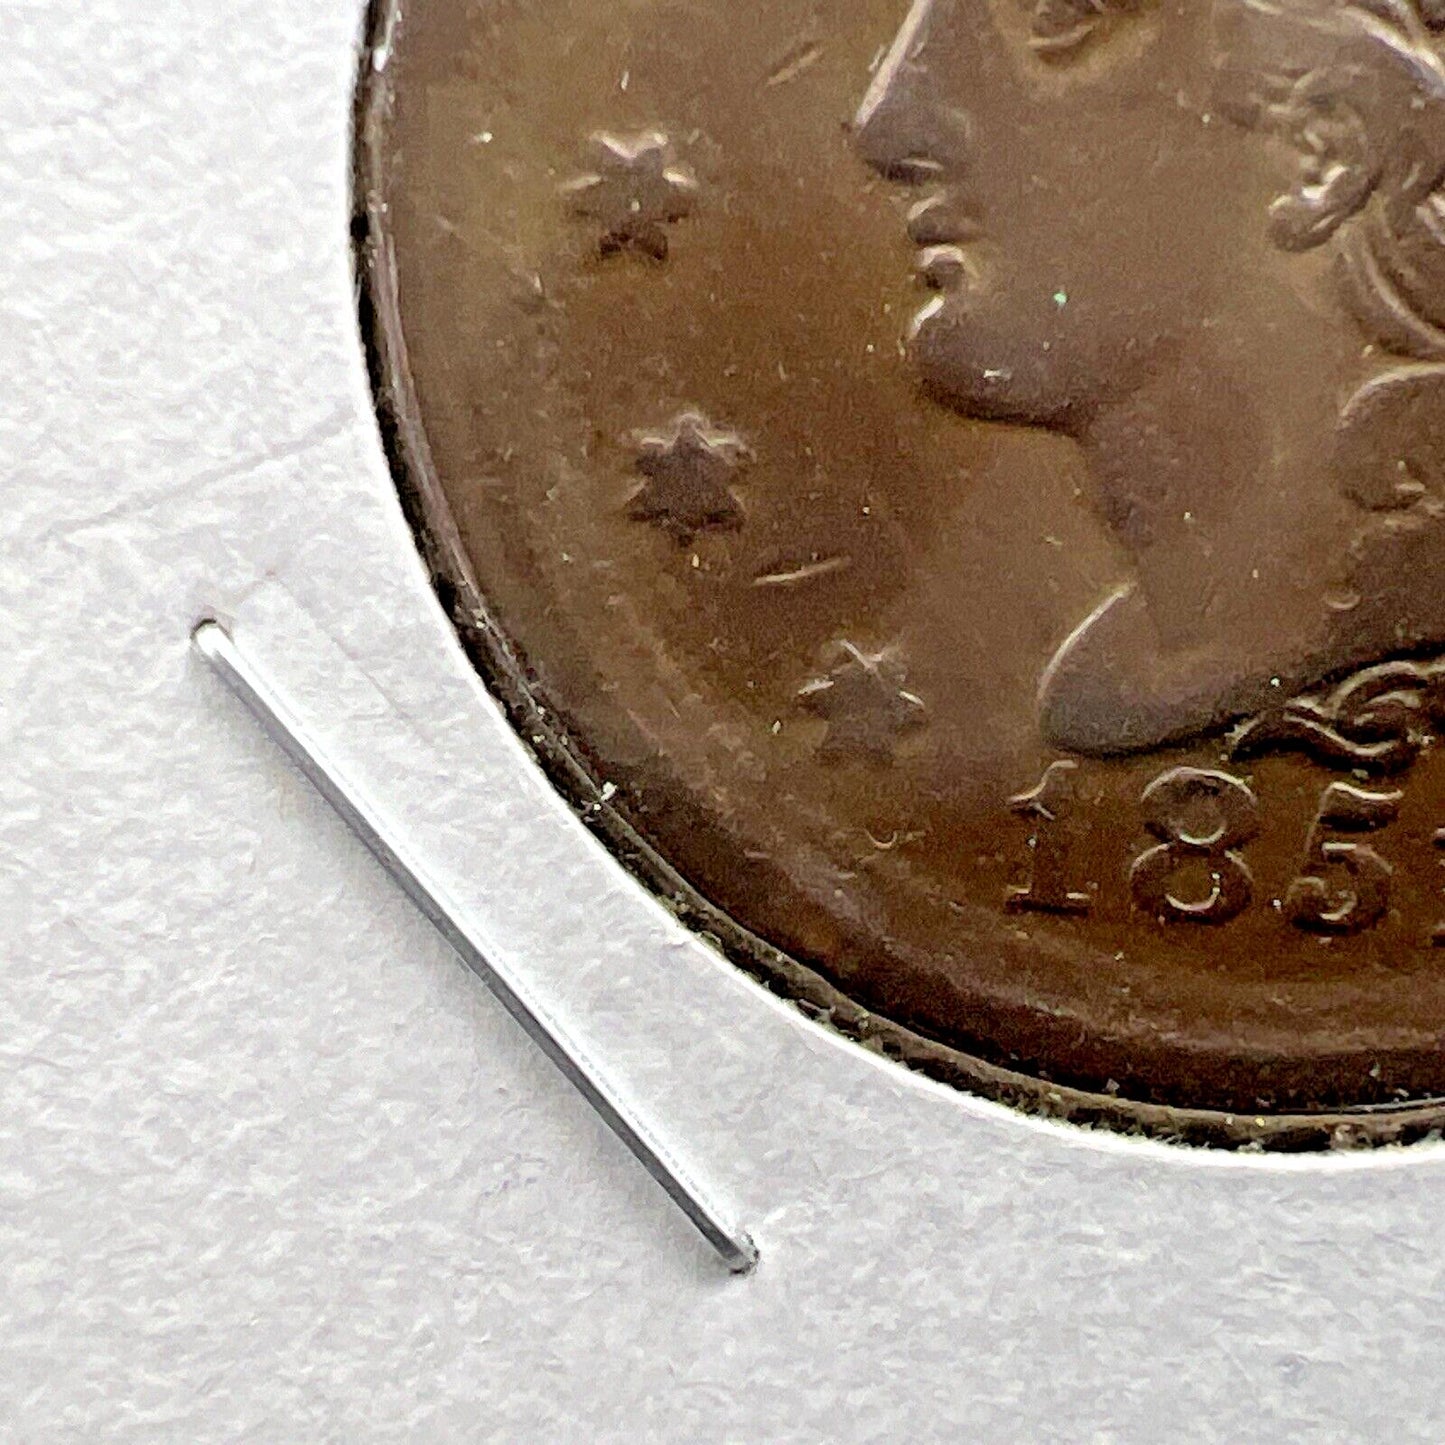 1851 1c Braided Hair Large Cent Coin OBV Struck Thru Grease Error XF EF Details